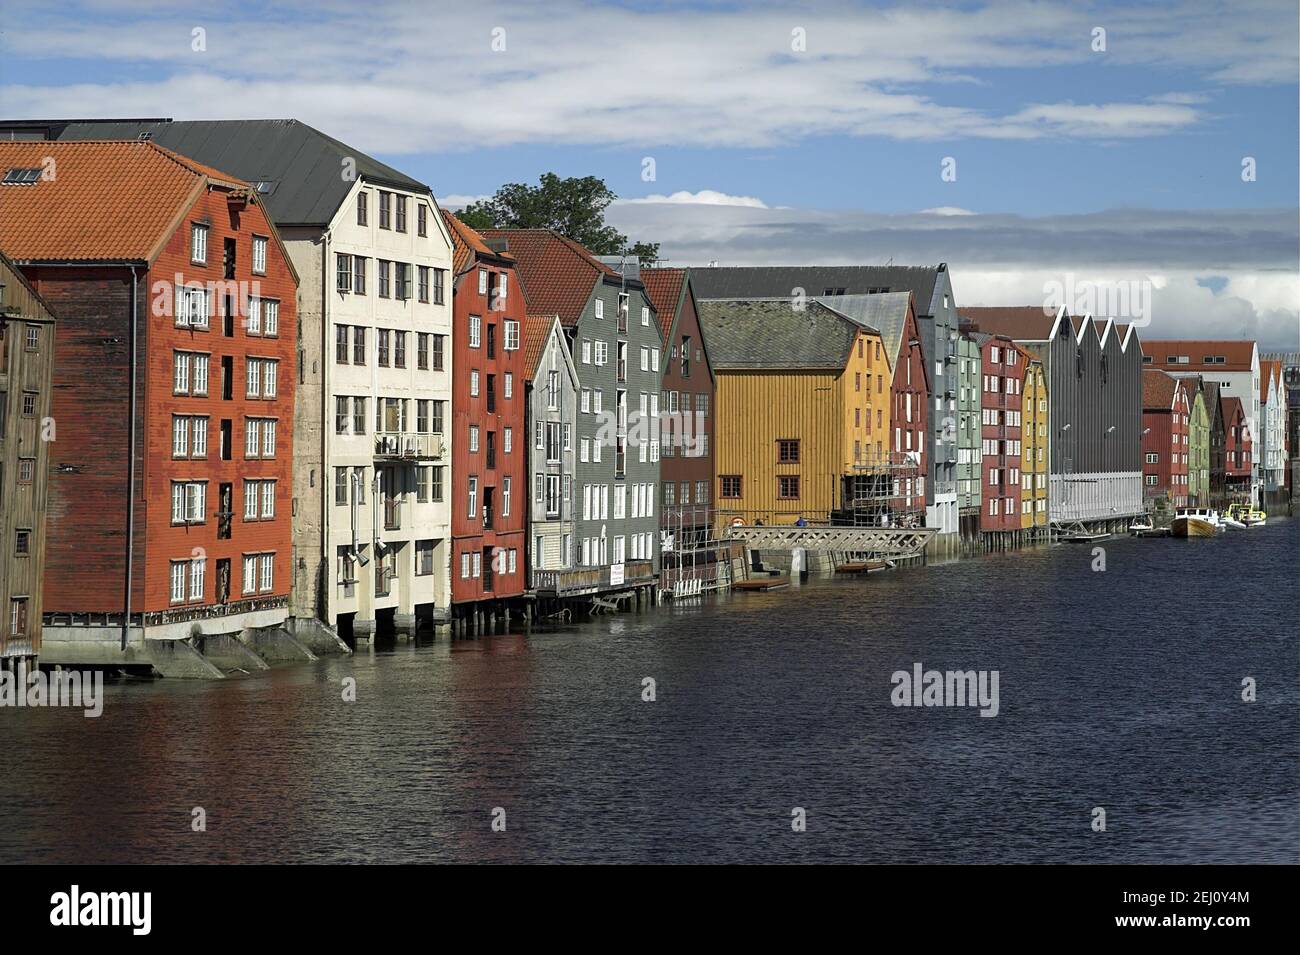 Trondheim, Norvegia, Norvegia; case mercantili di legno e magazzini su palafitte sulle rive del fiume Nidelva; Kaufmannshäuser und Lagerhäuser auf Stelzen Foto Stock